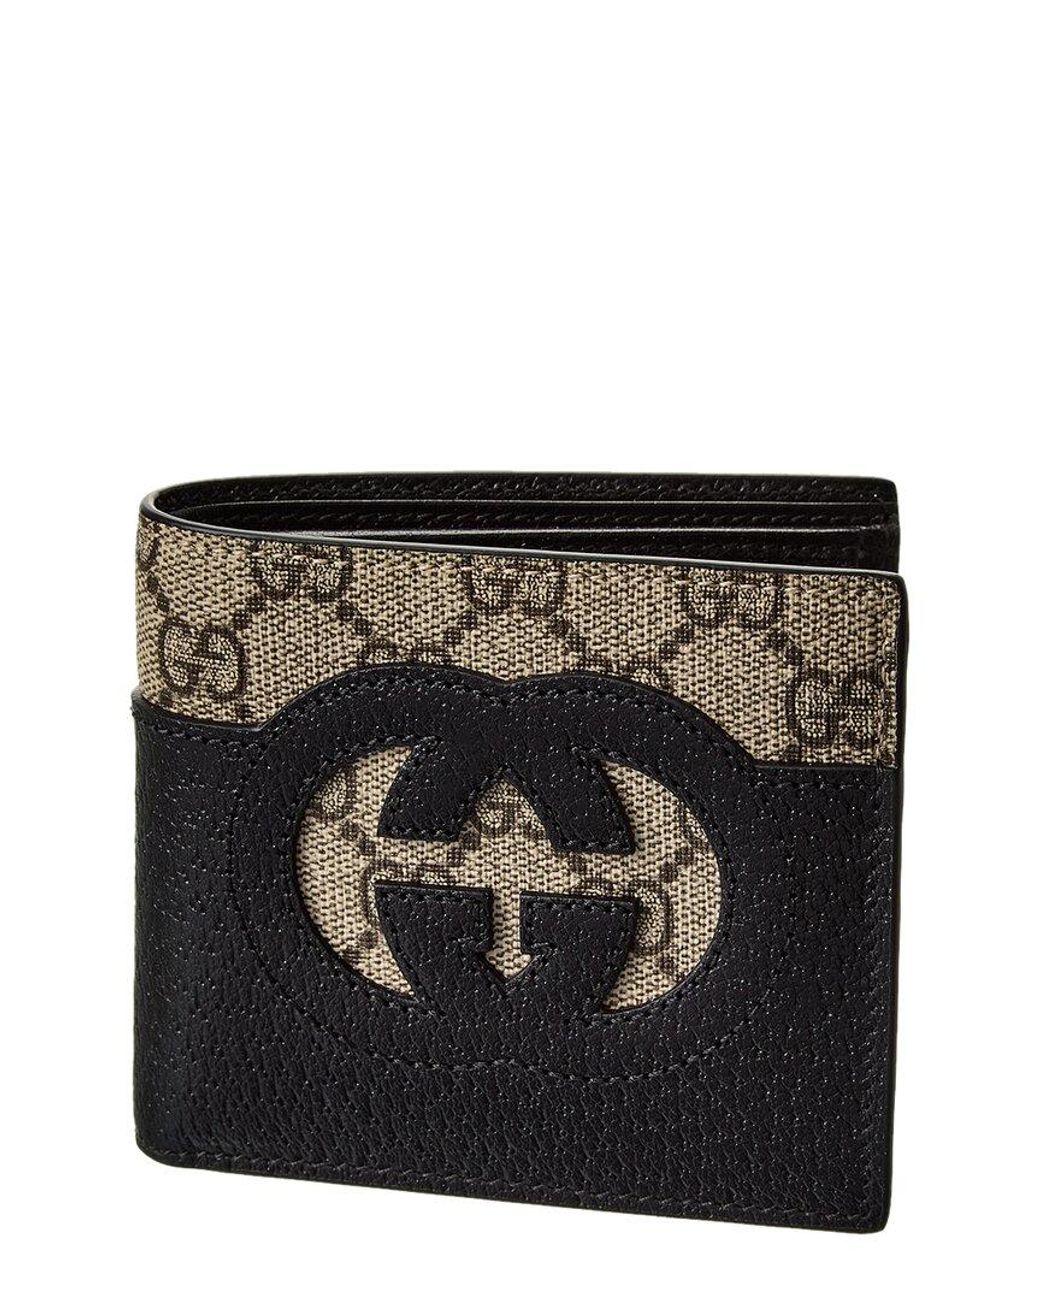 Gucci Gg Supreme Canvas Wallet - Black